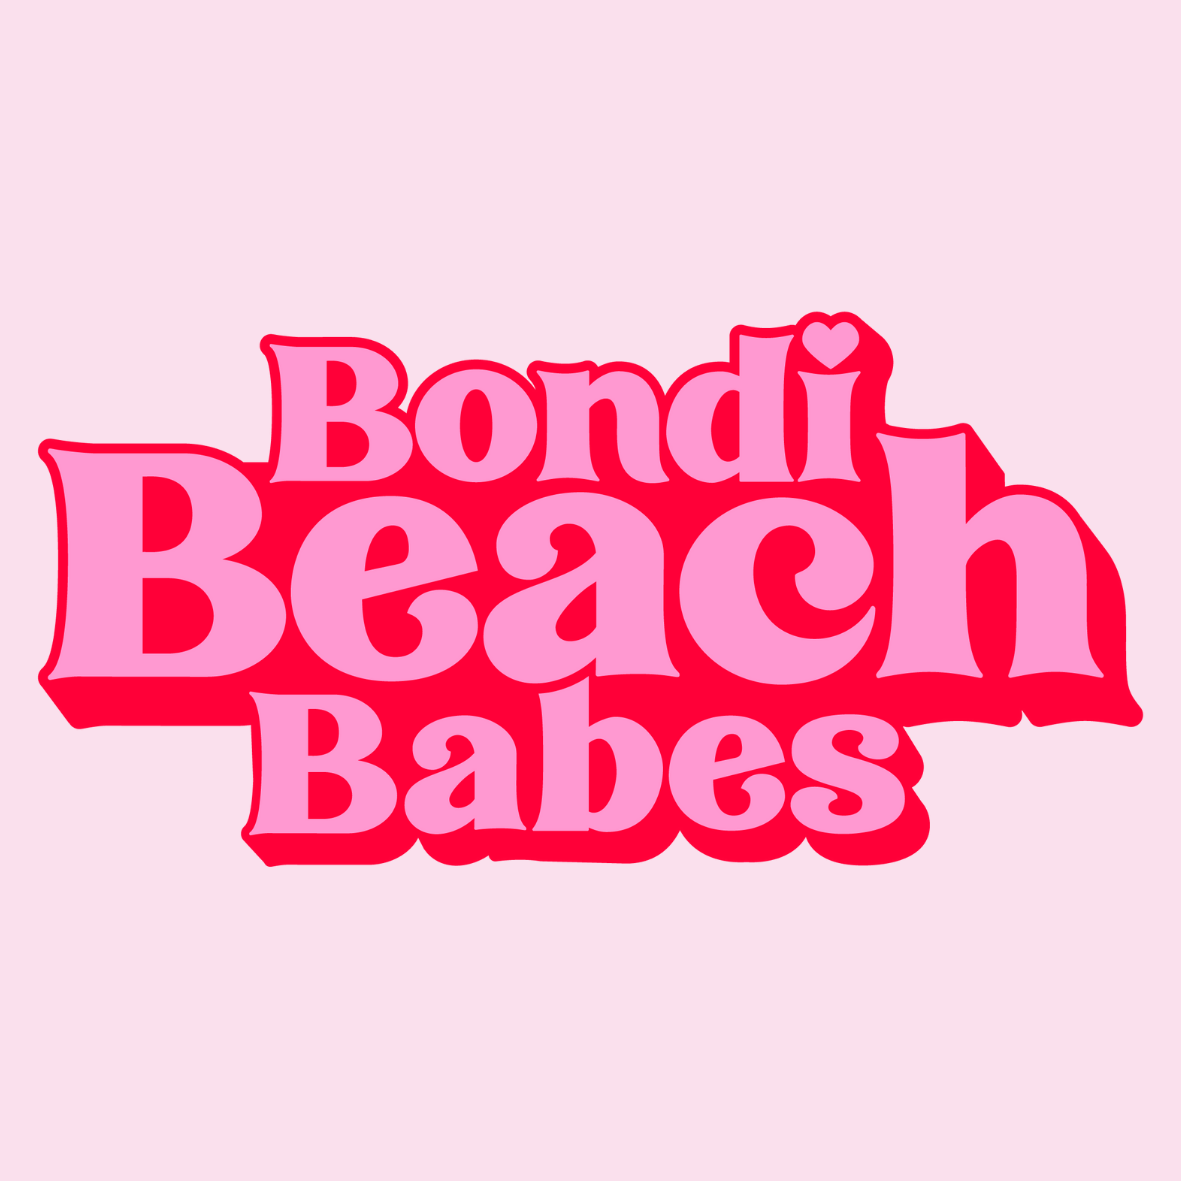 Bondi Beach Babes